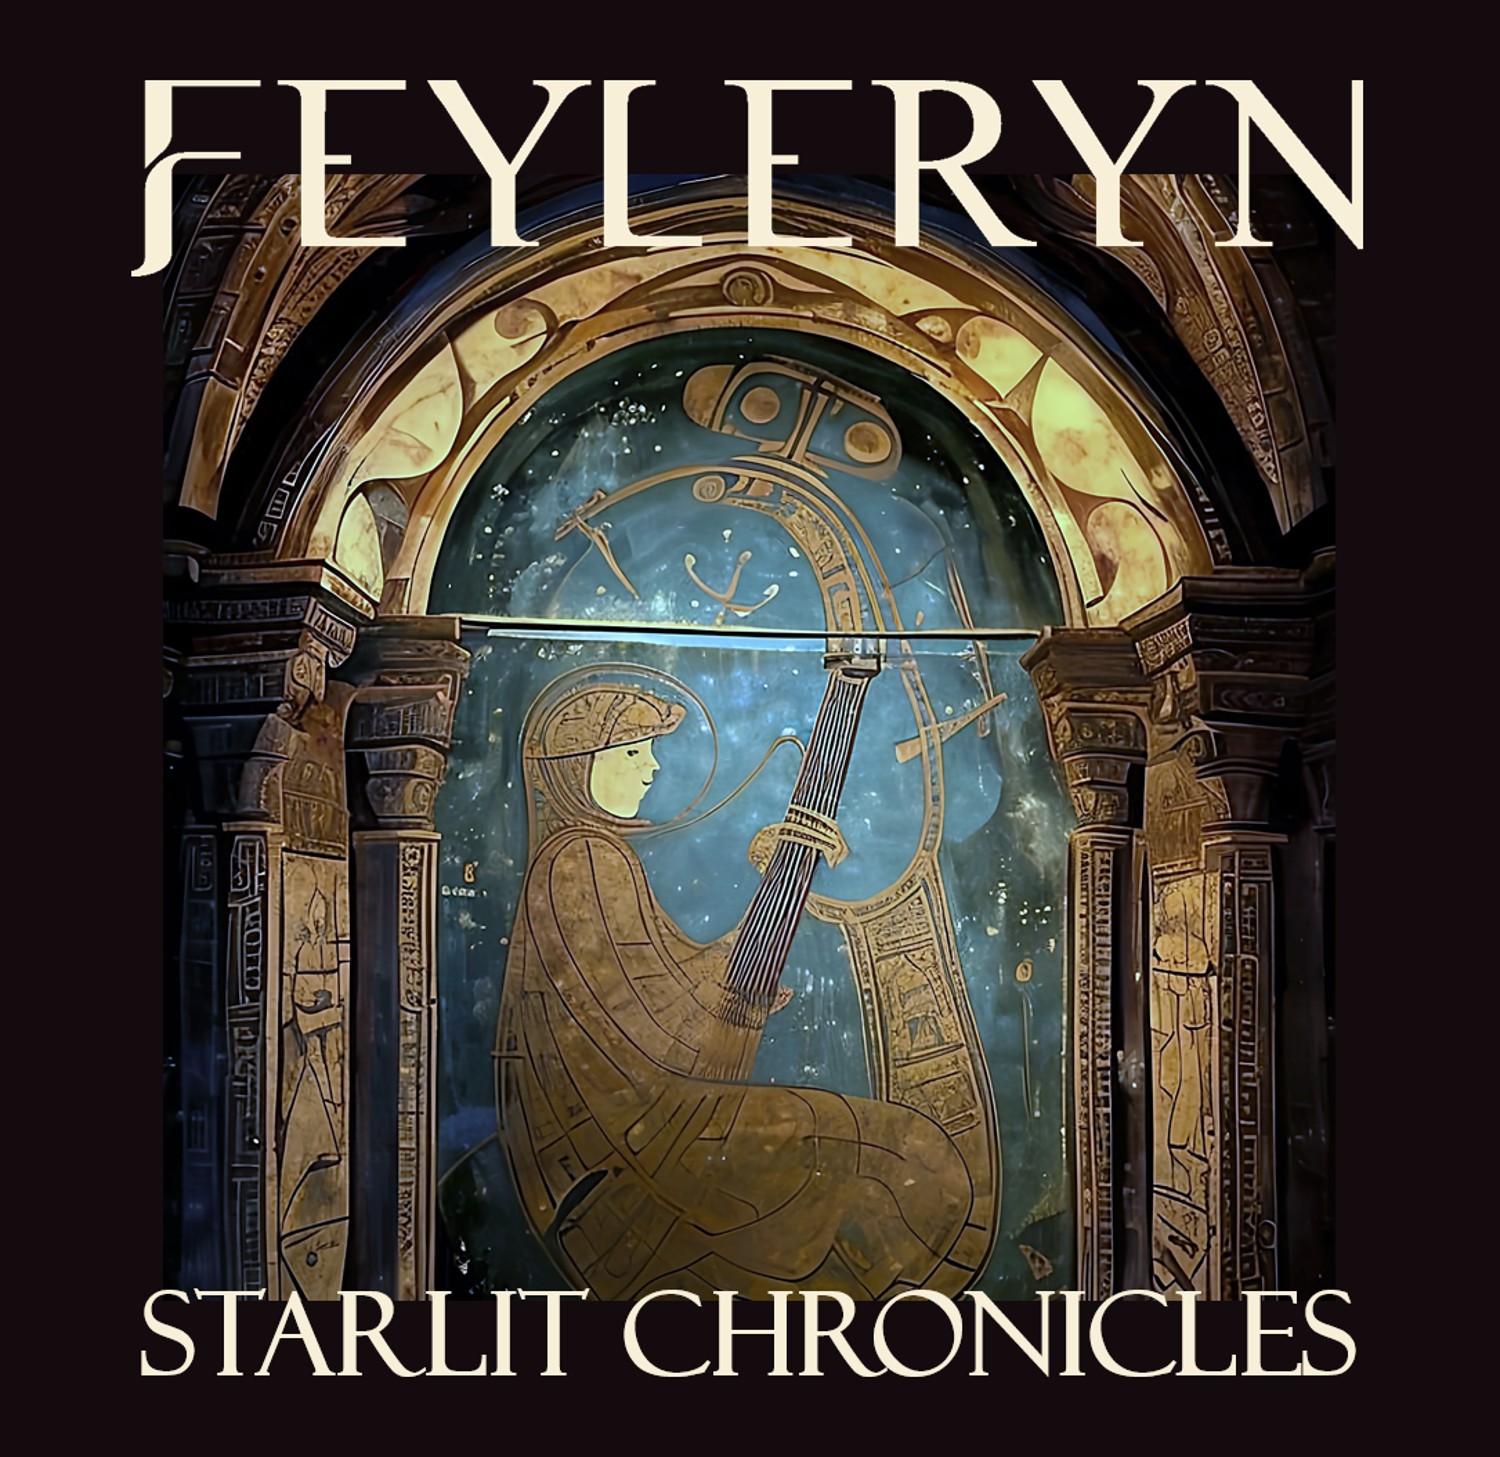 Feyleryn ‘Starlit Chronicles’ EP album artwork